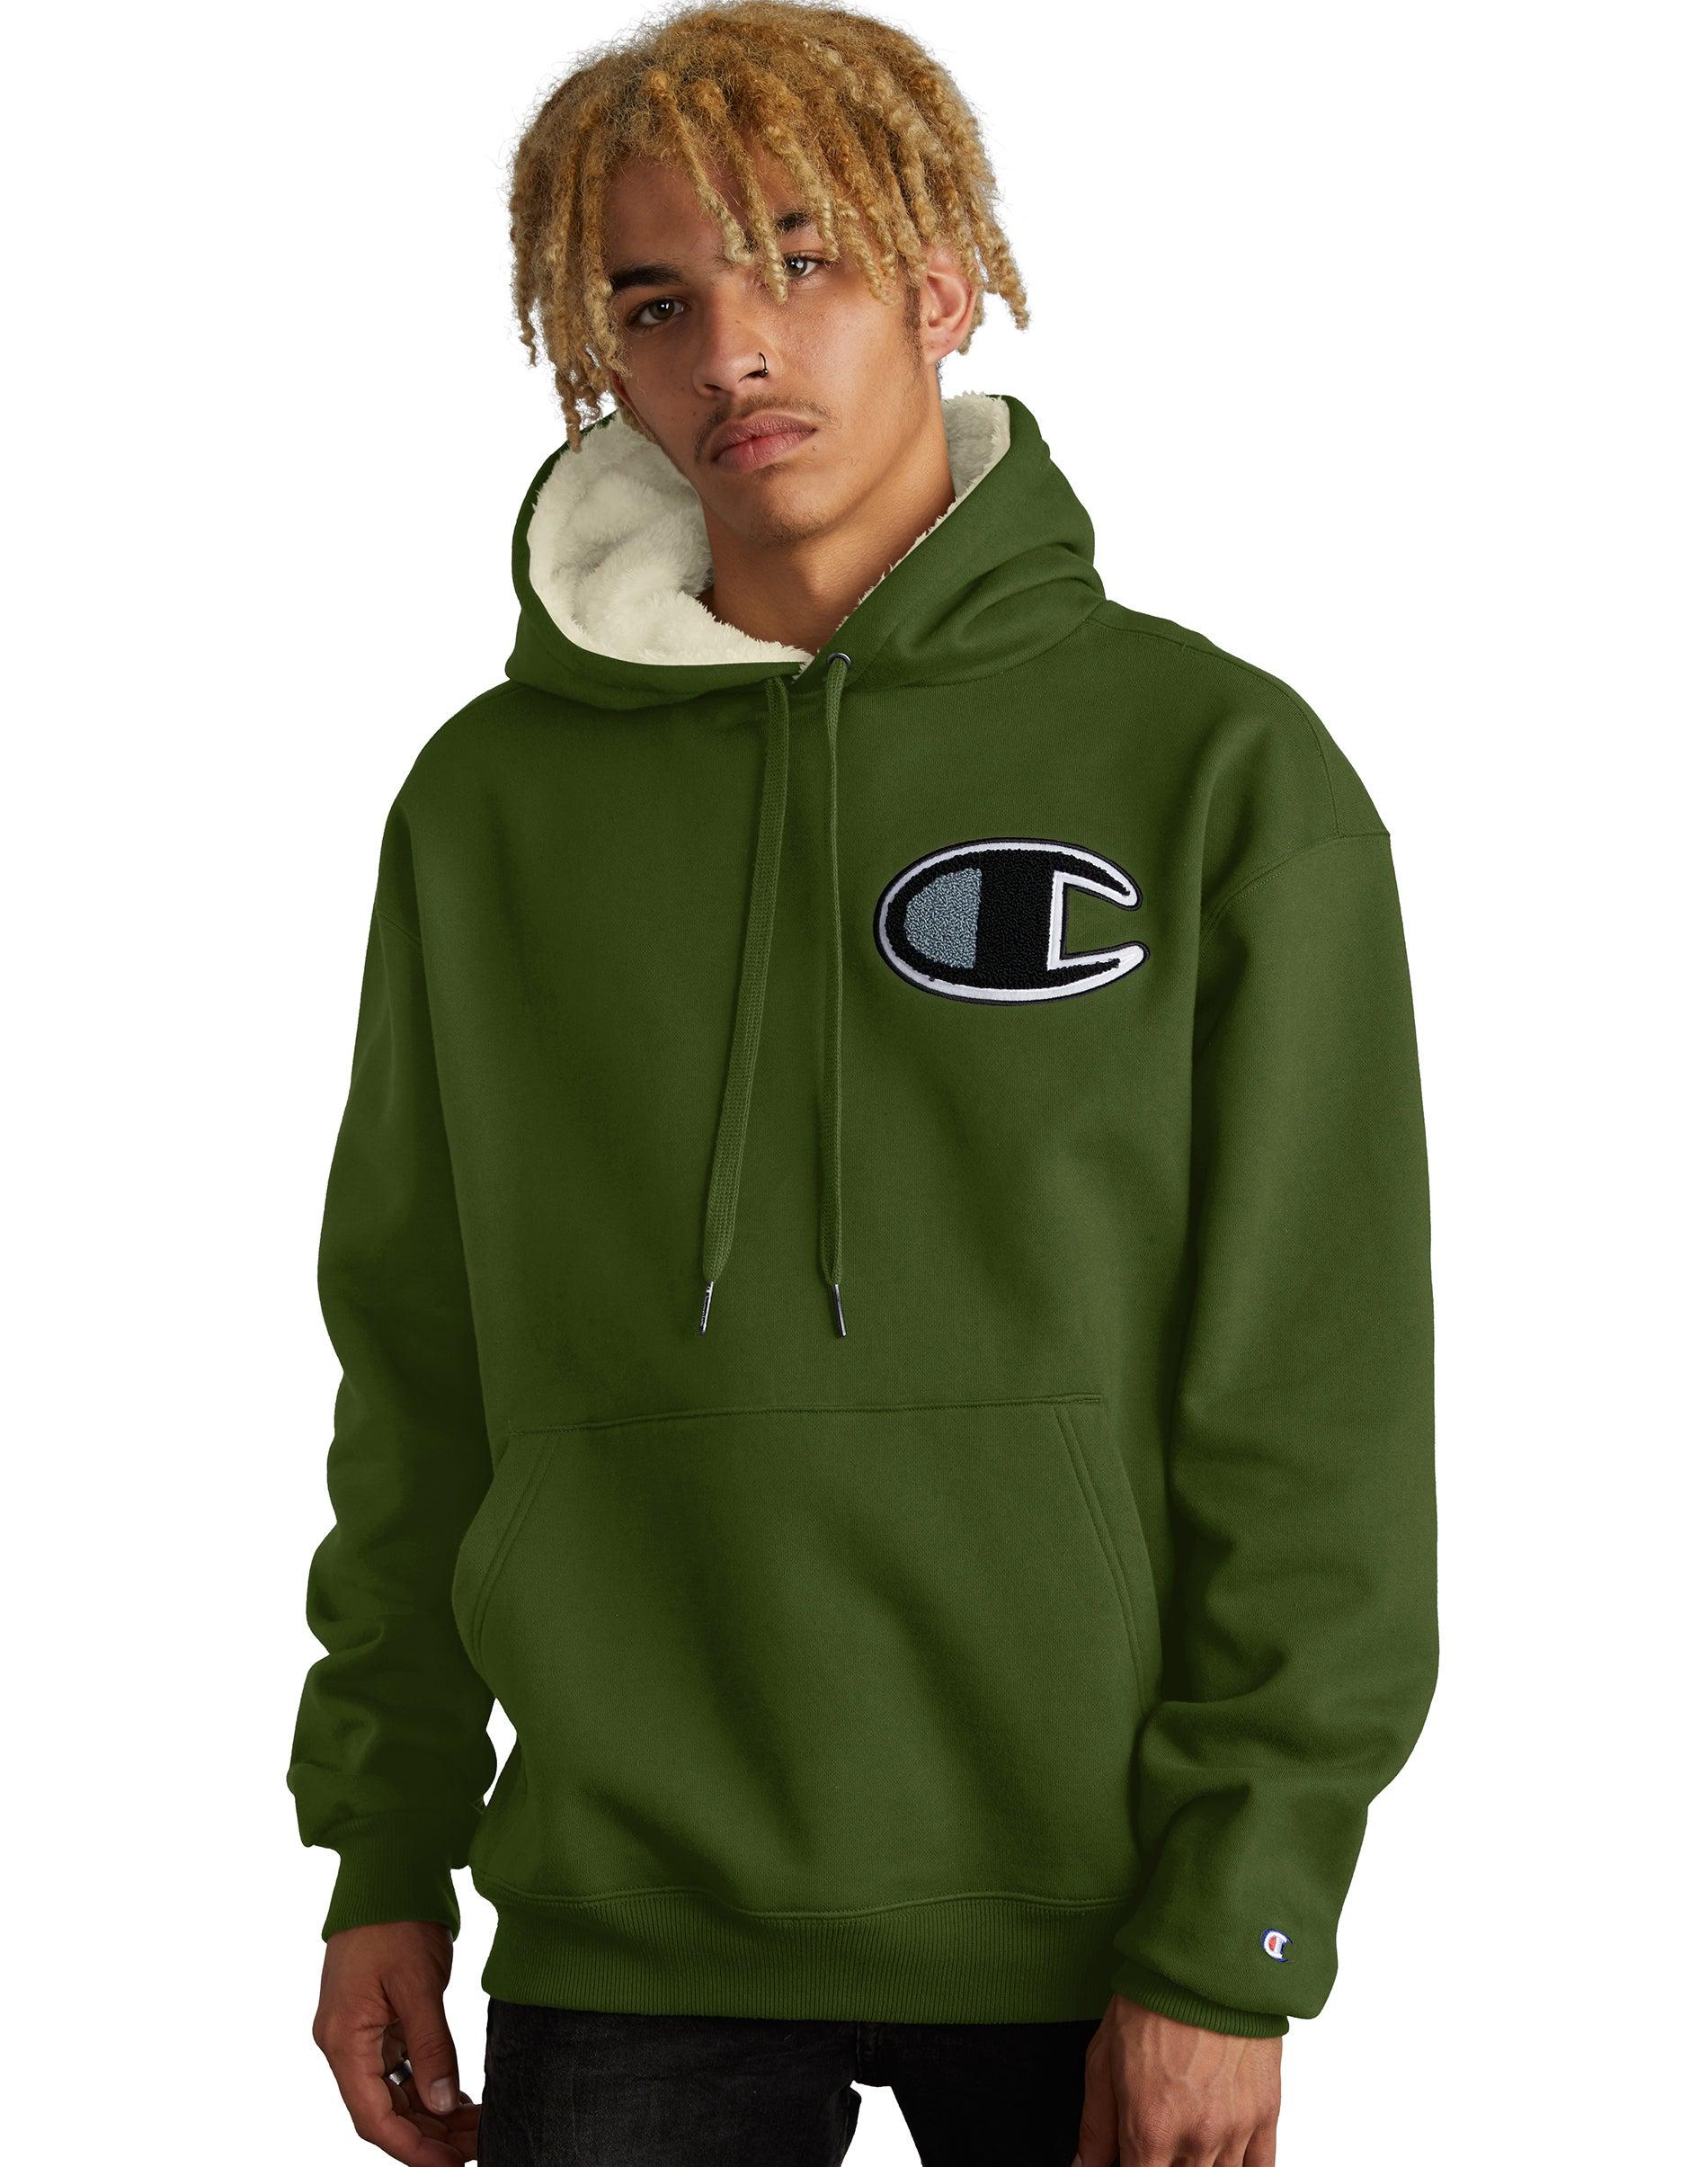 olive green champion jacket